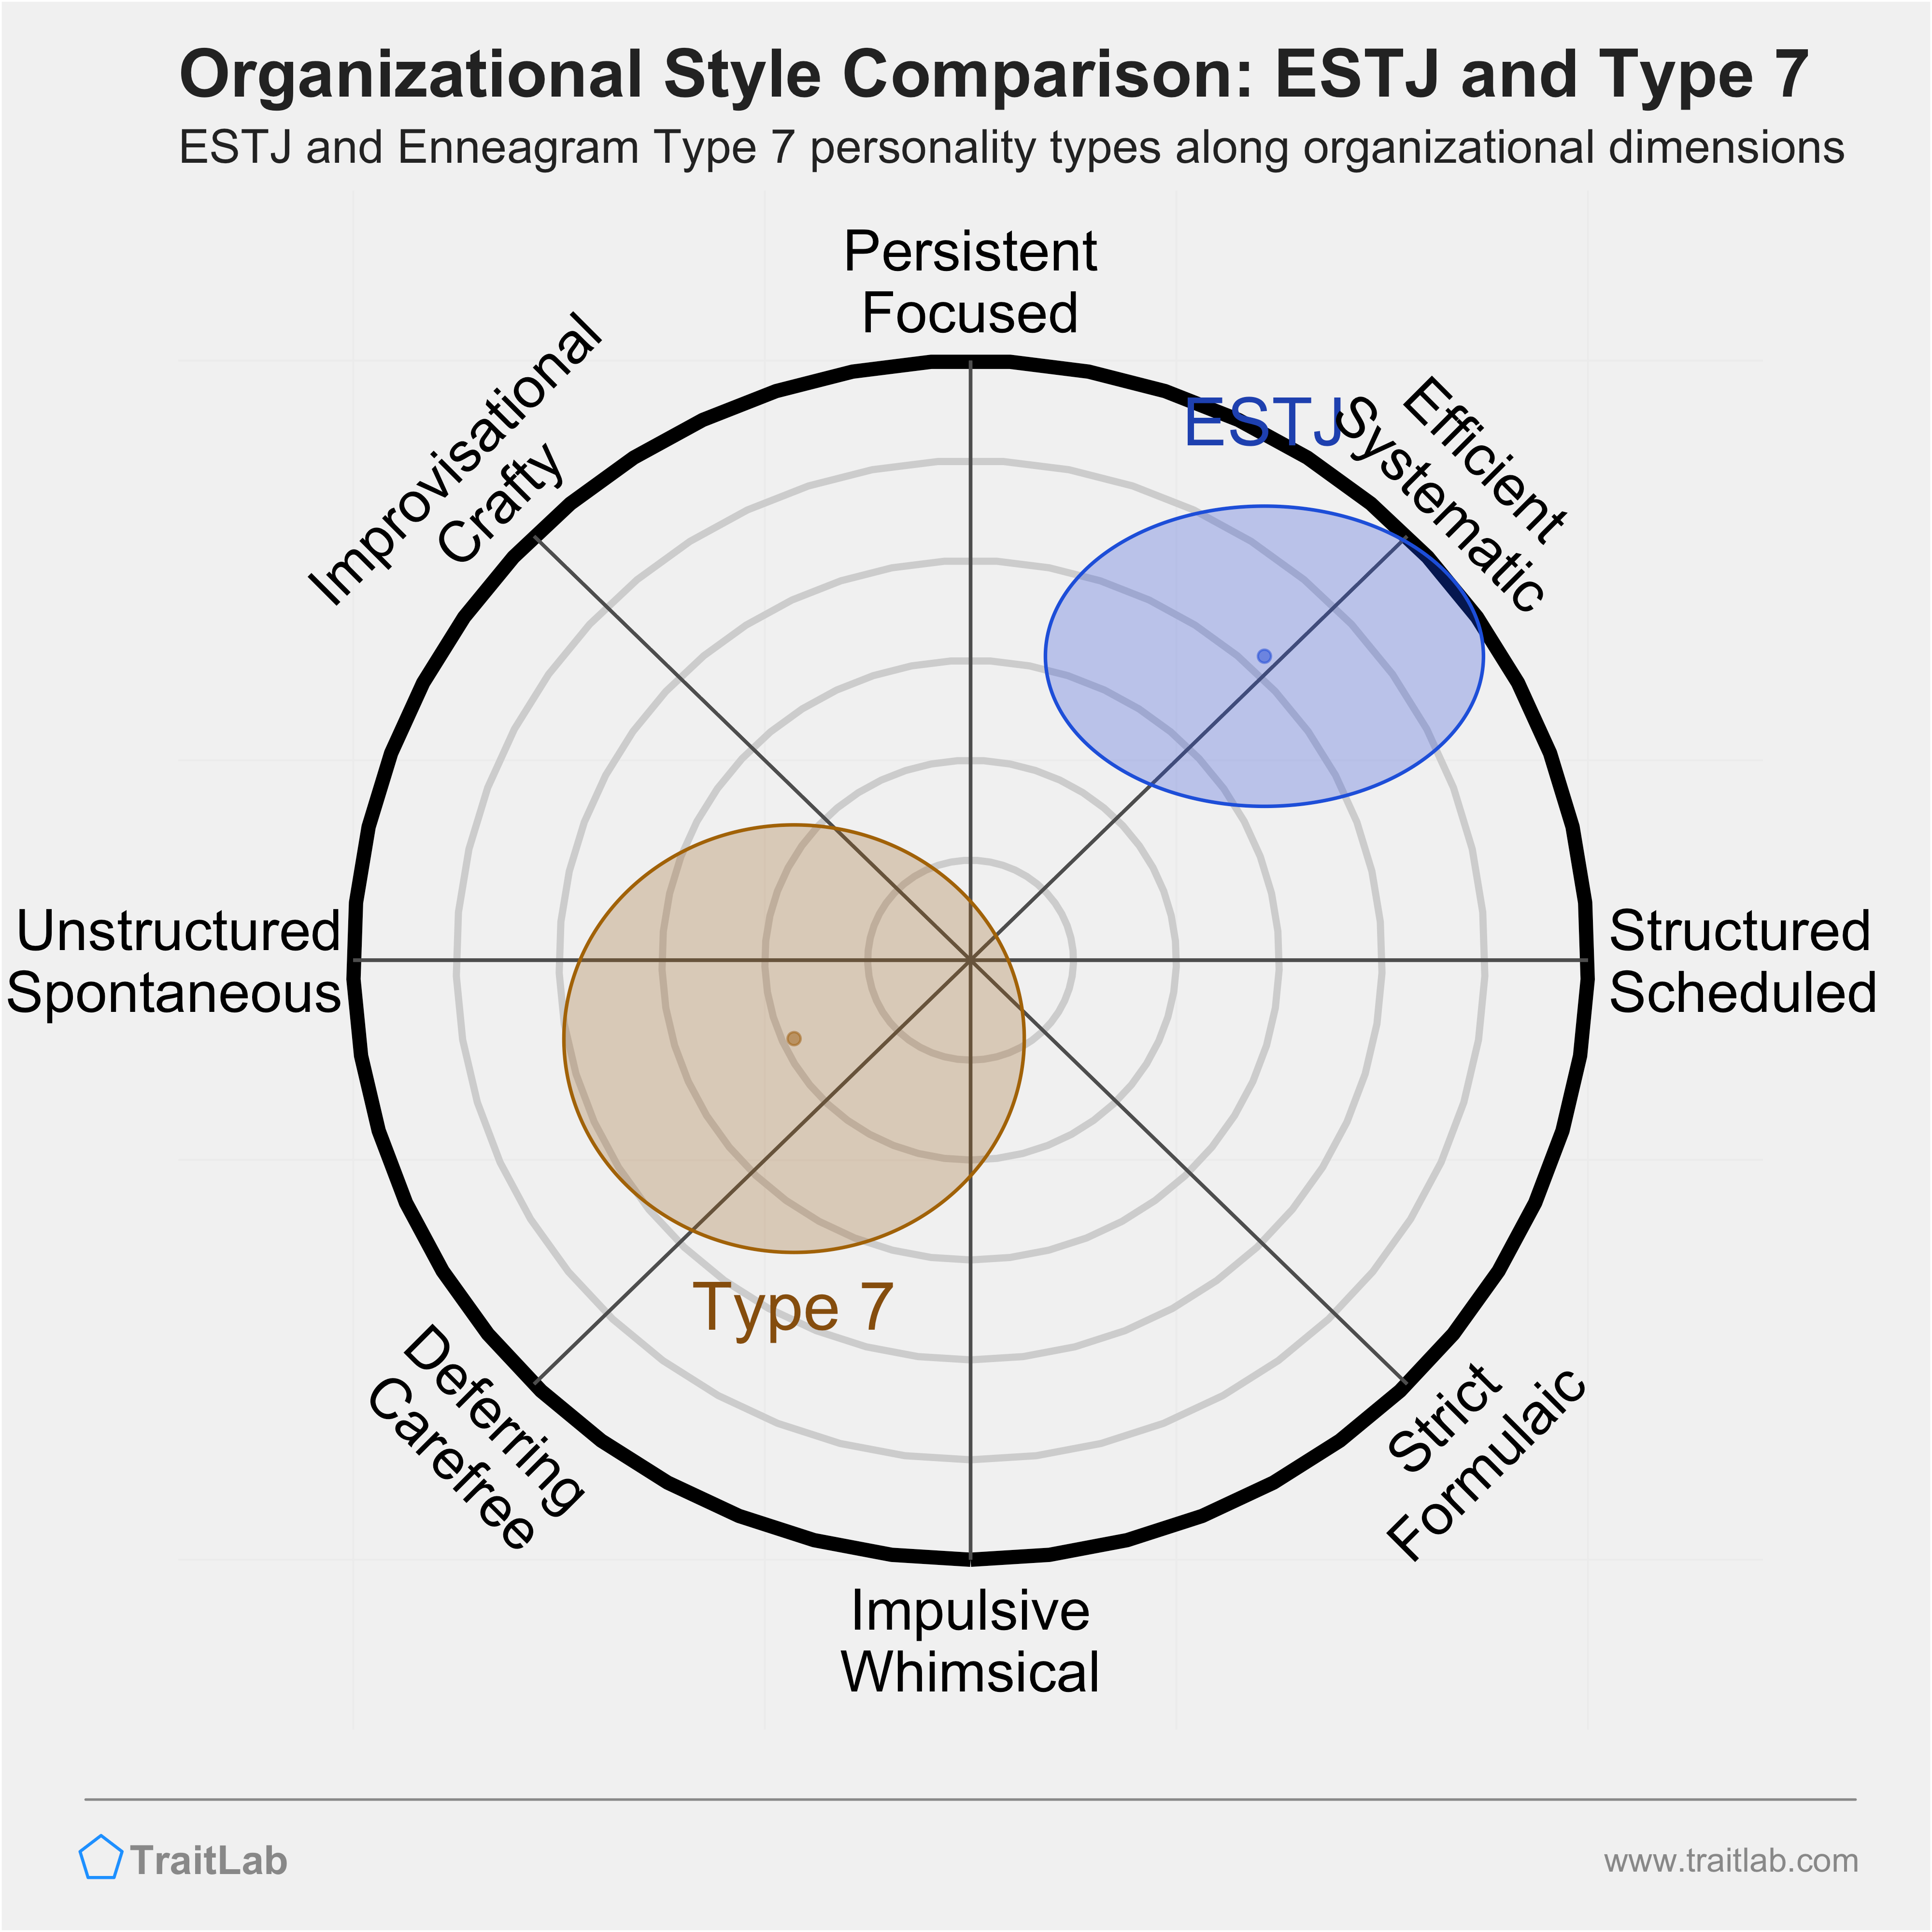 ESTJ and Type 7 comparison across organizational dimensions